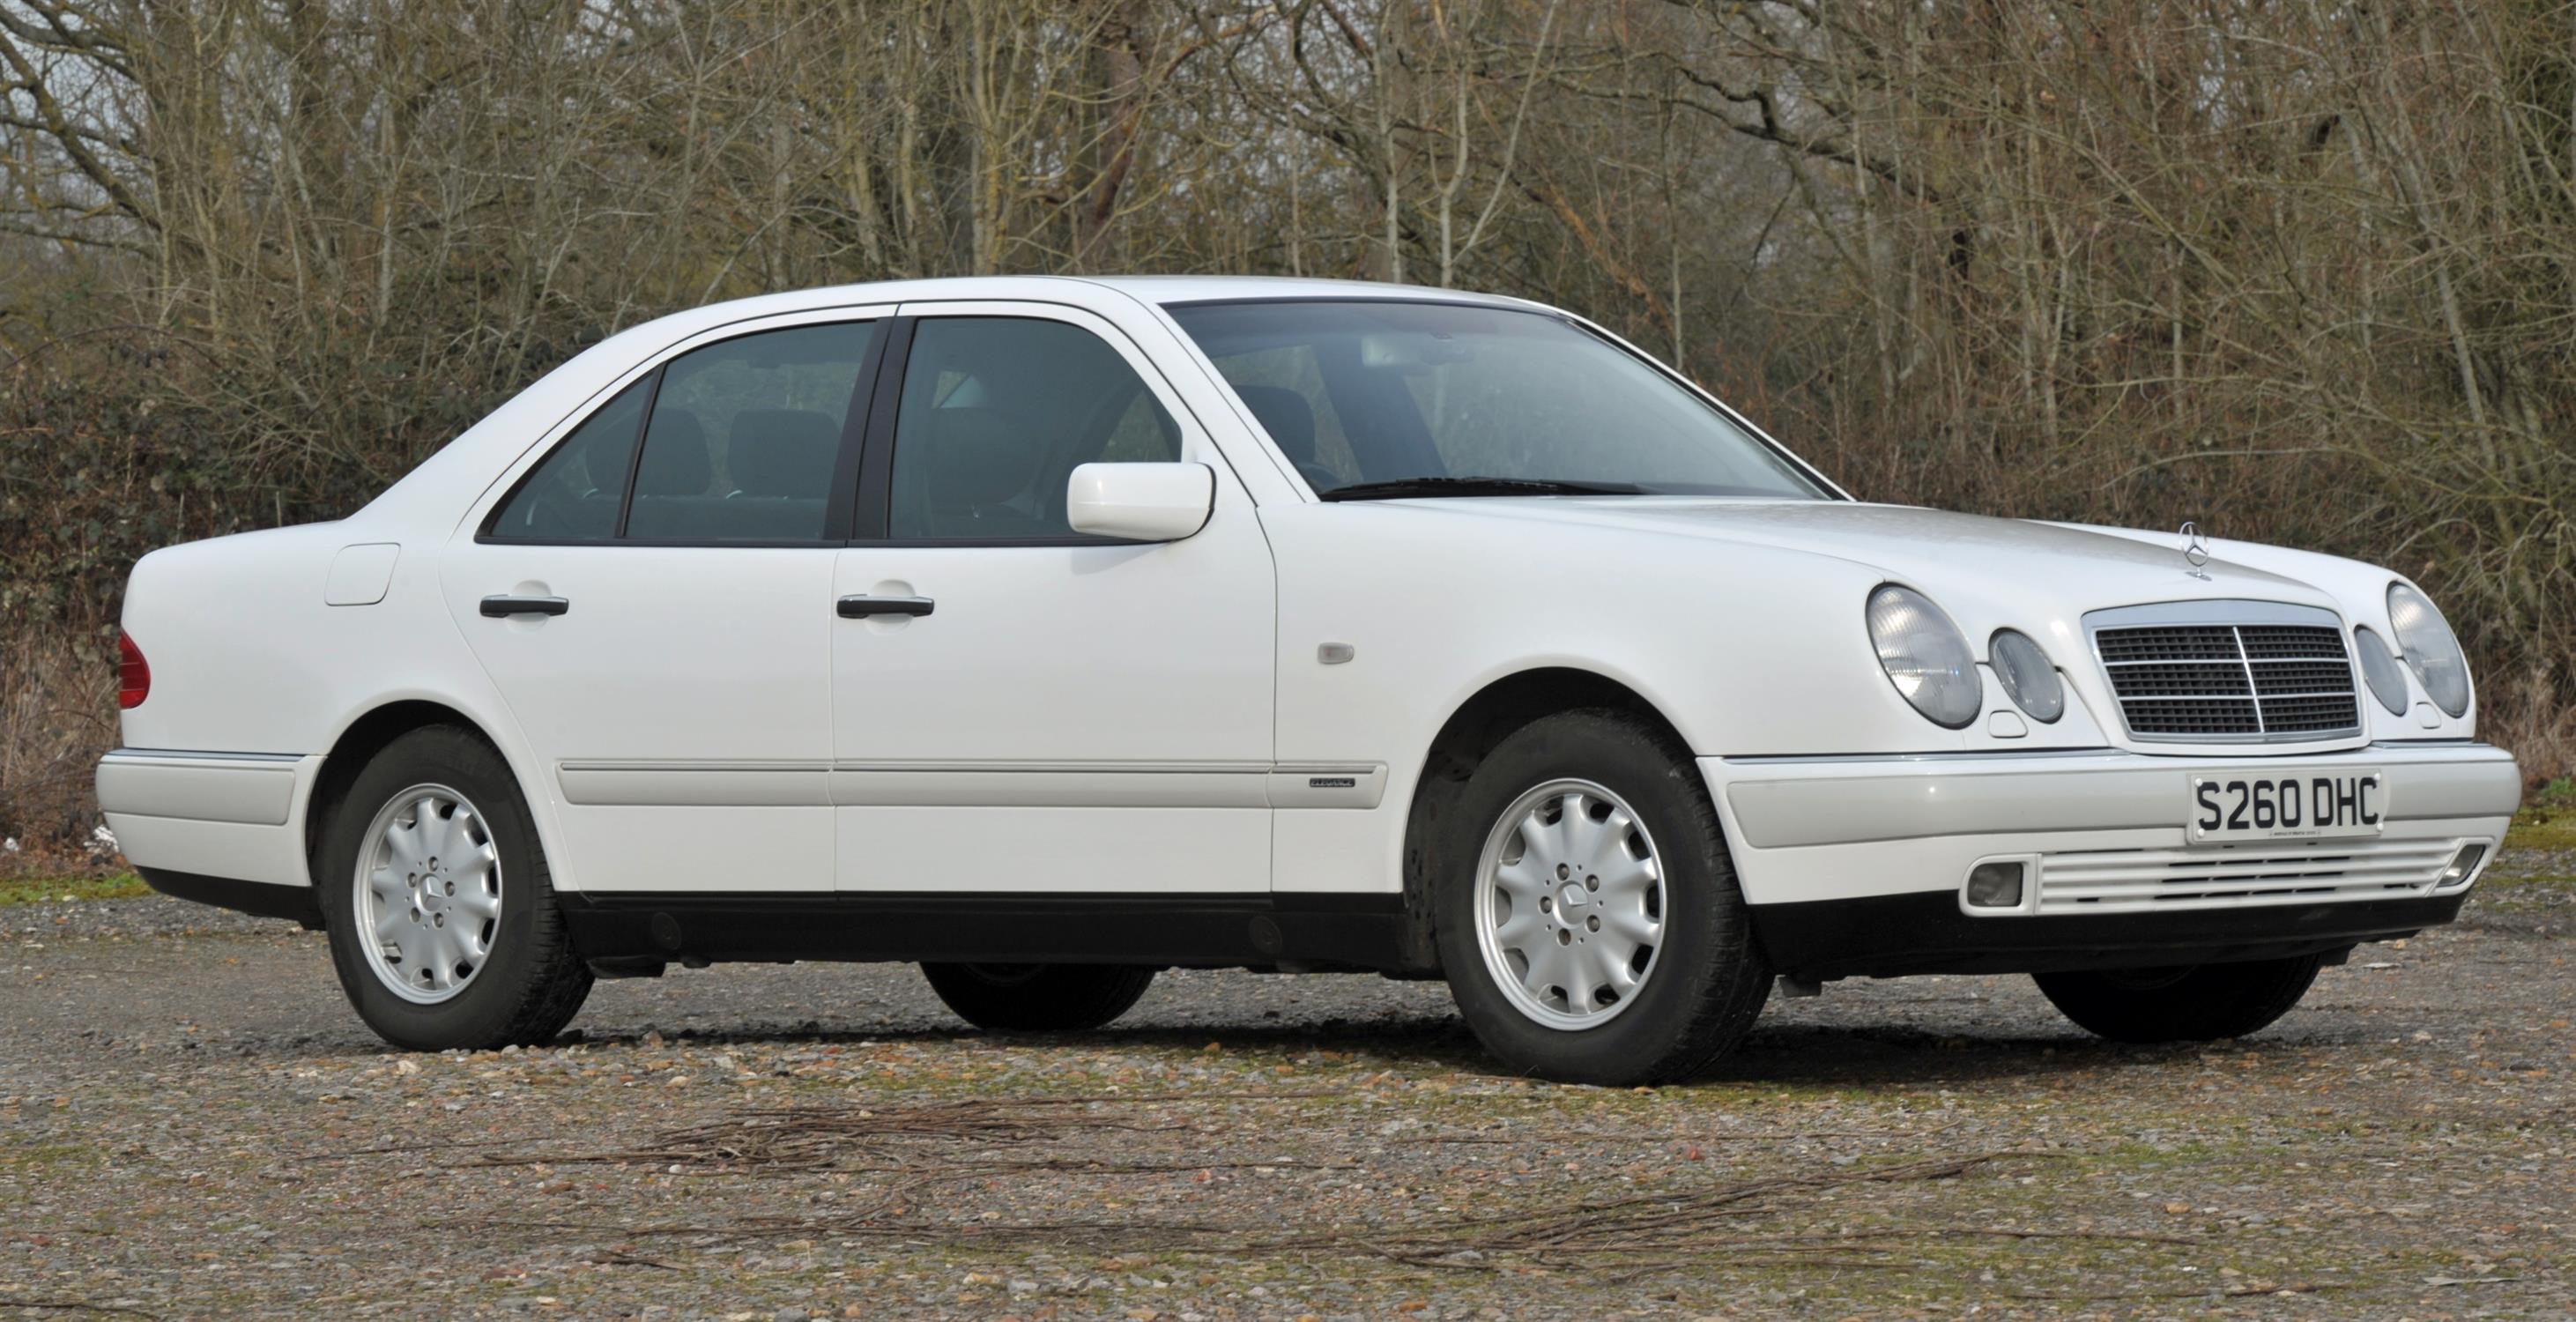 1998 Mercedes Benz E240 Elegance Saloon Petrol Automatic. Registration: S260 DHC. Mileage: 133,